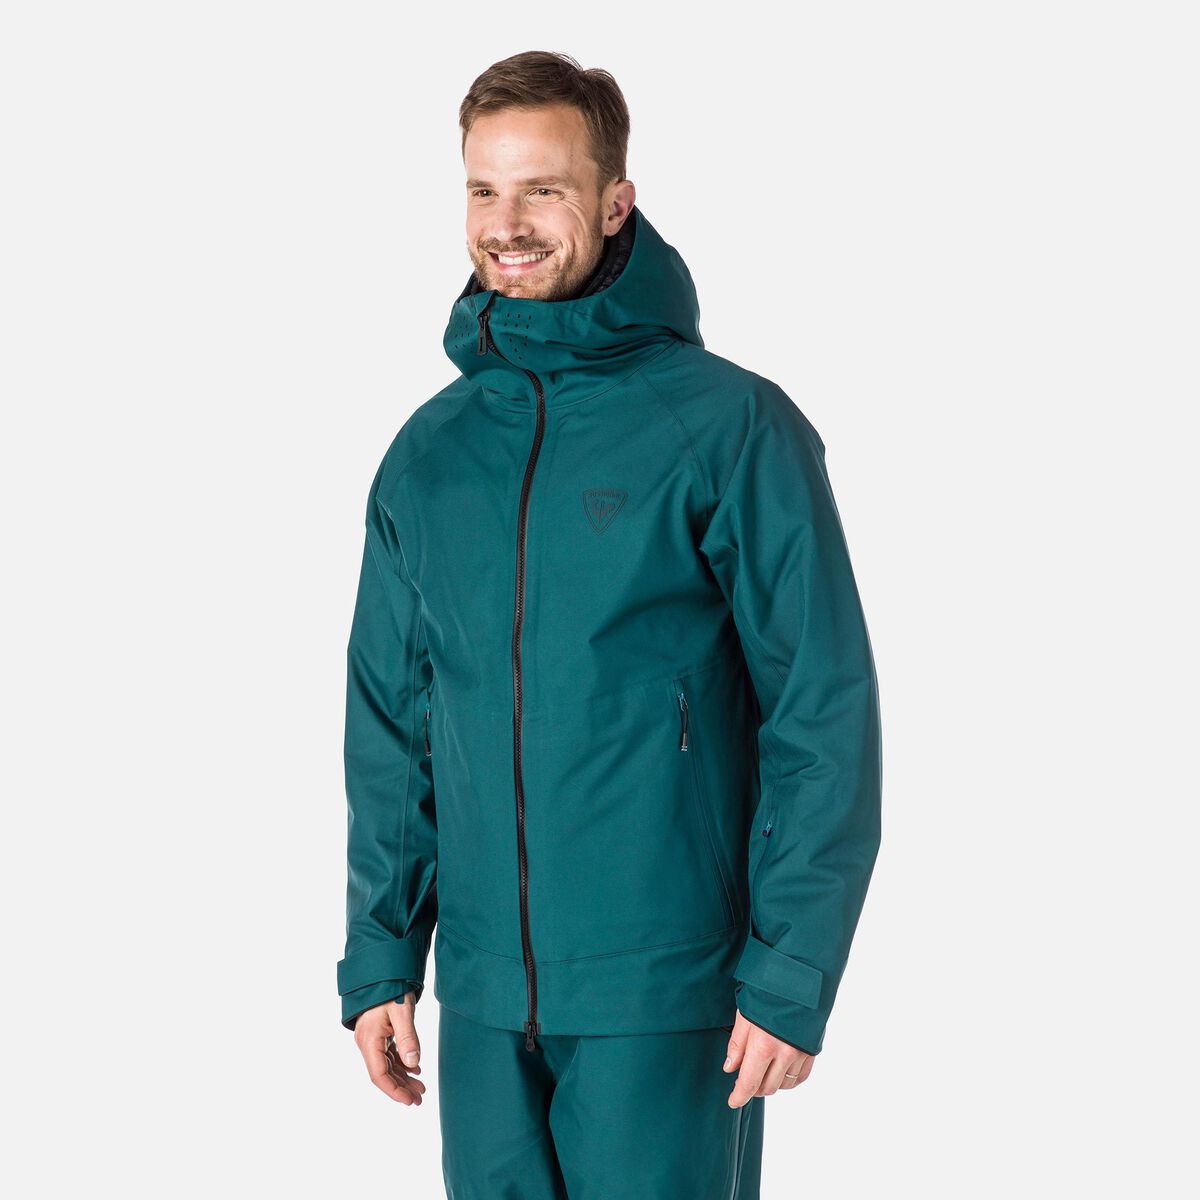 Men's SKPR 3-Layer ski jacket